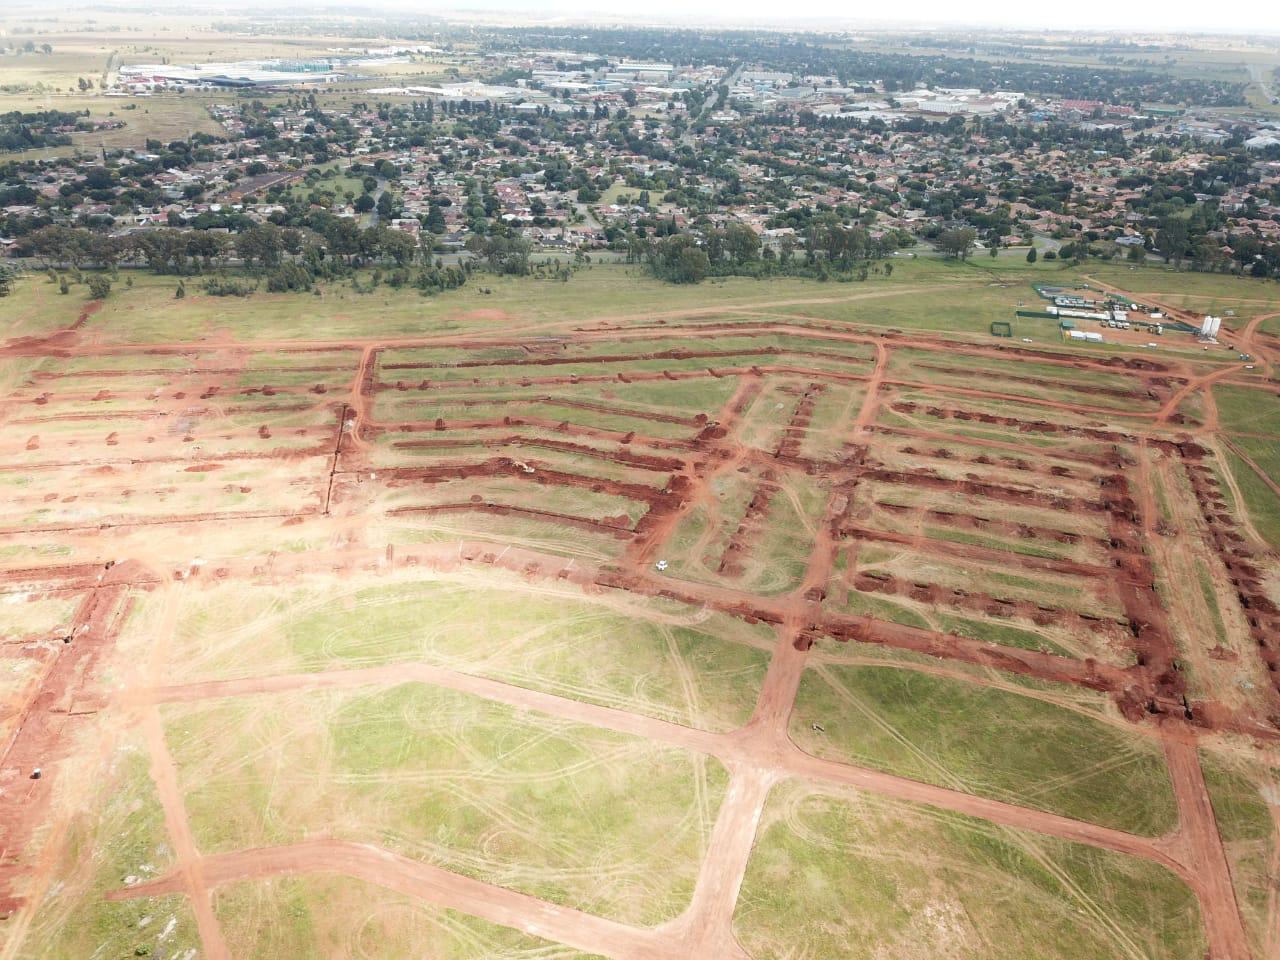 Daggafontein Mega-City